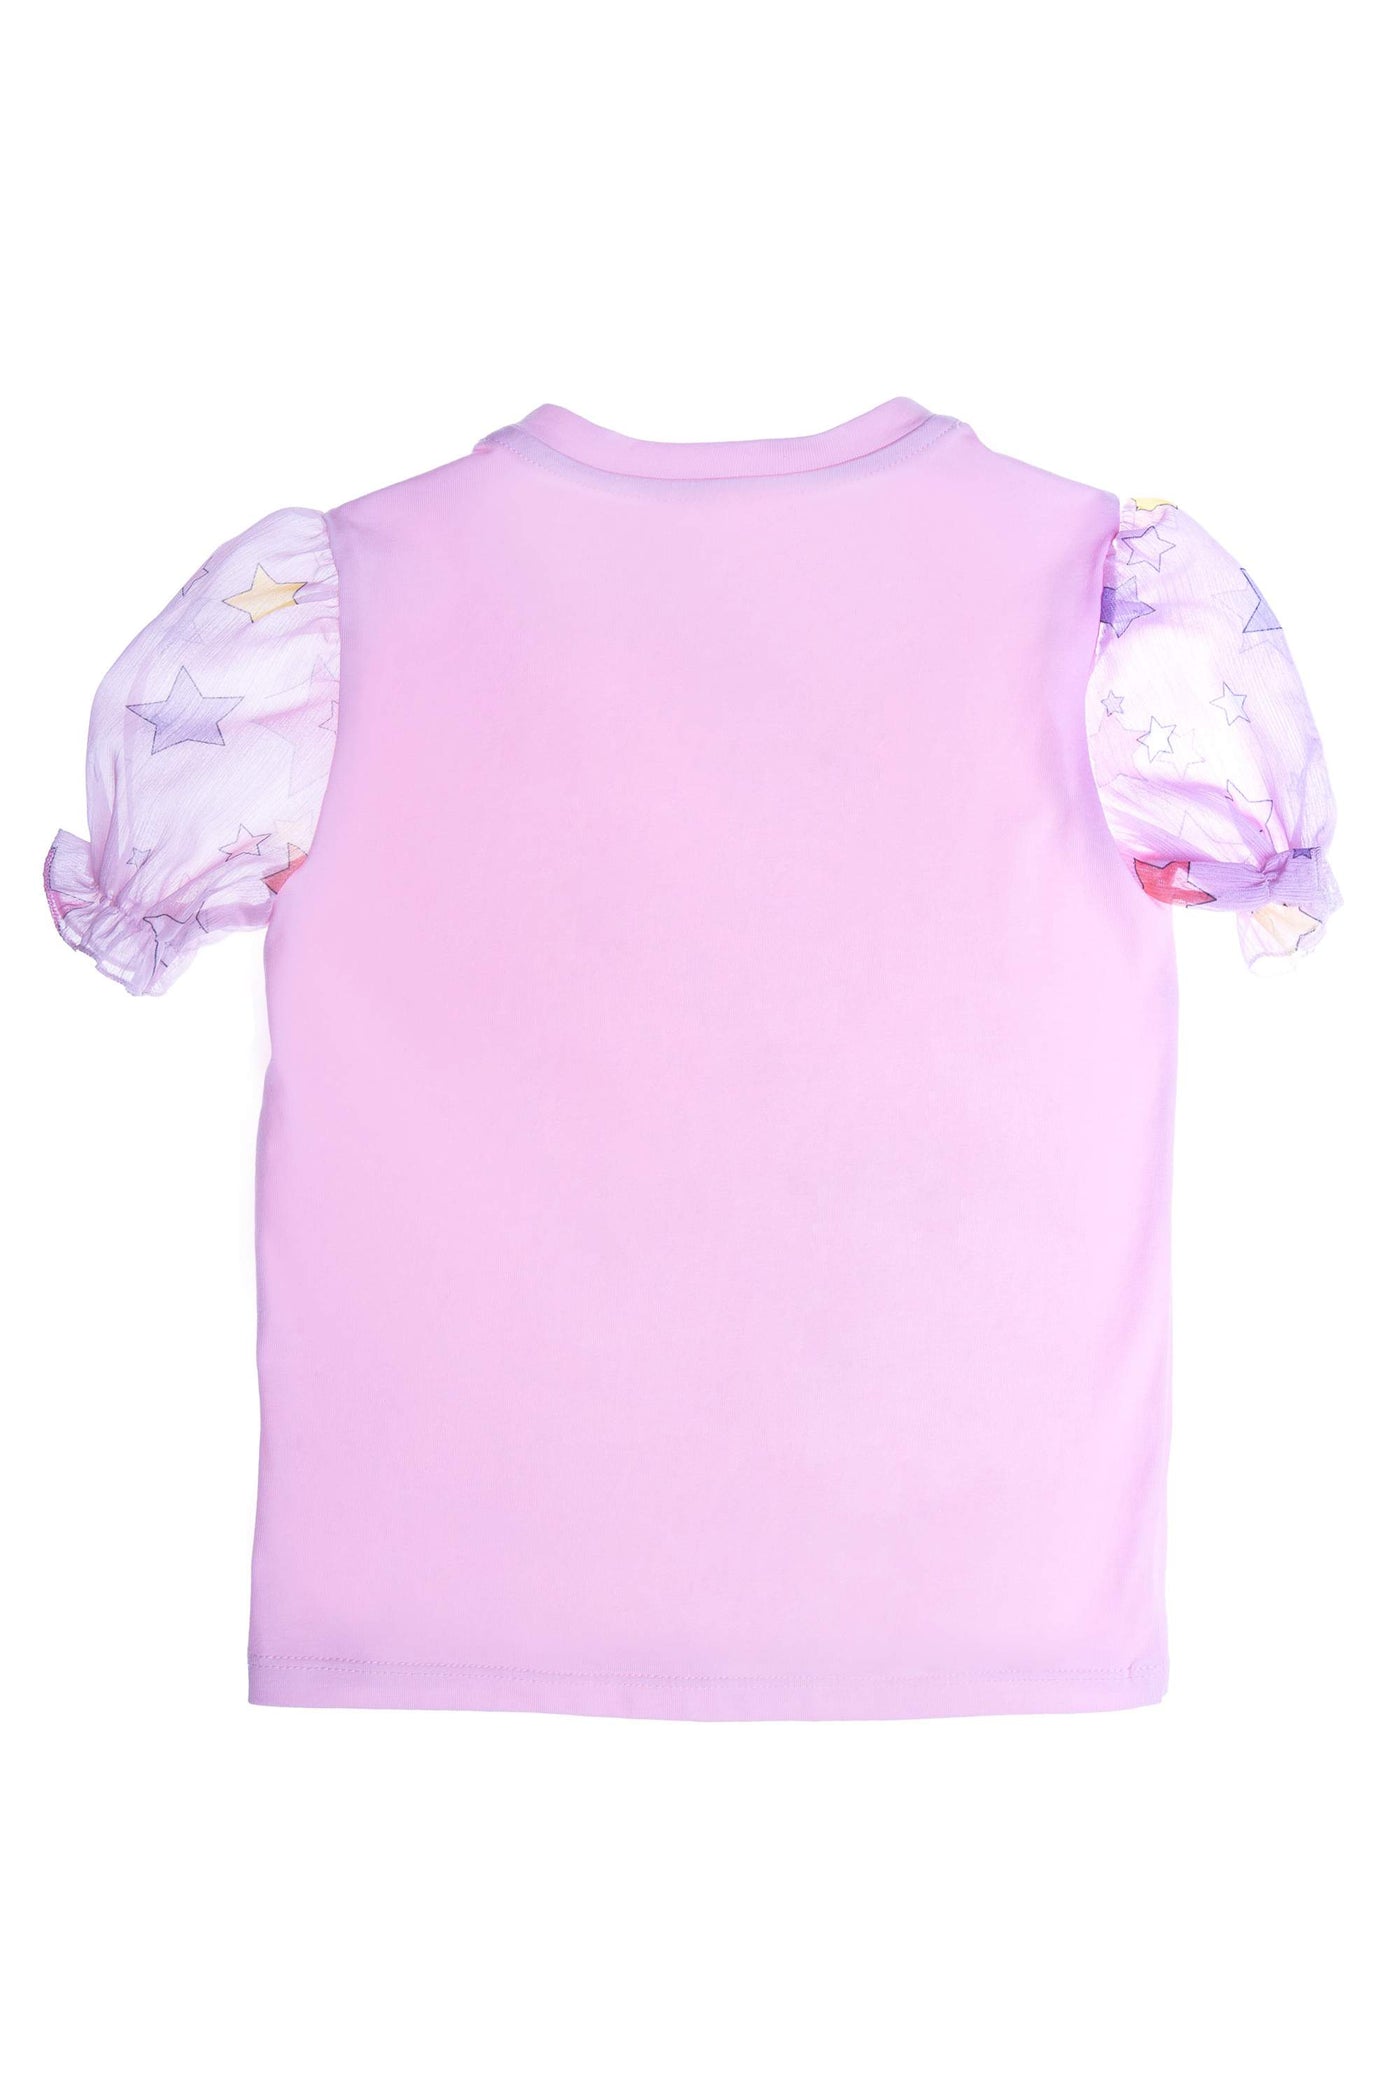 Pink Dream Like a Unicorn hand-embellished t-shirt with chiffon sleeves